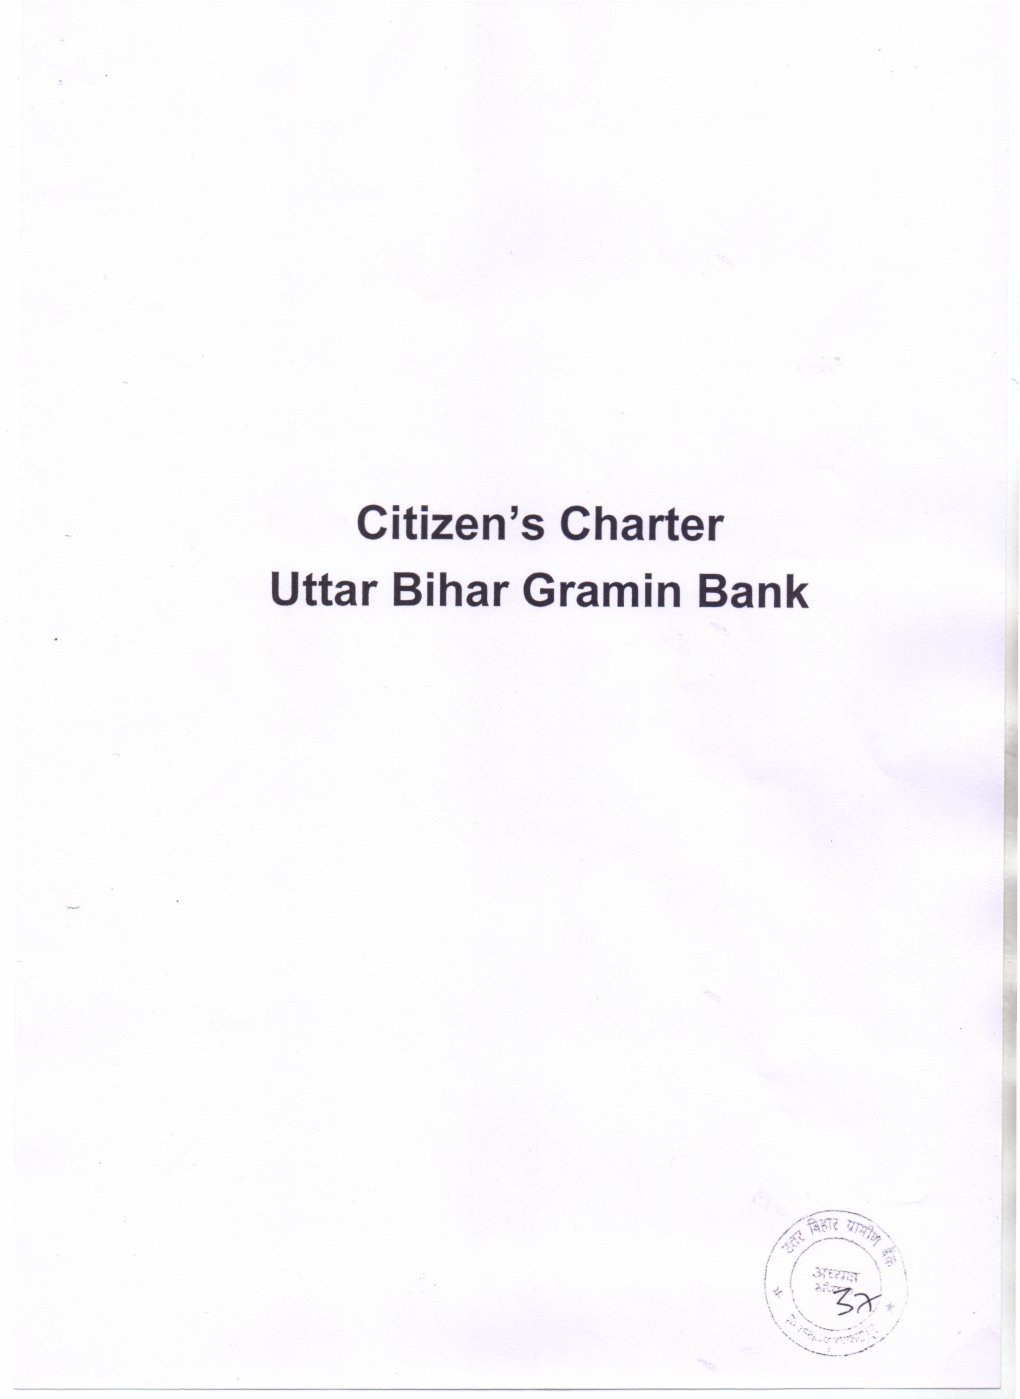 Citizen's Charter Uttar Bihar Gramin Bank Vision